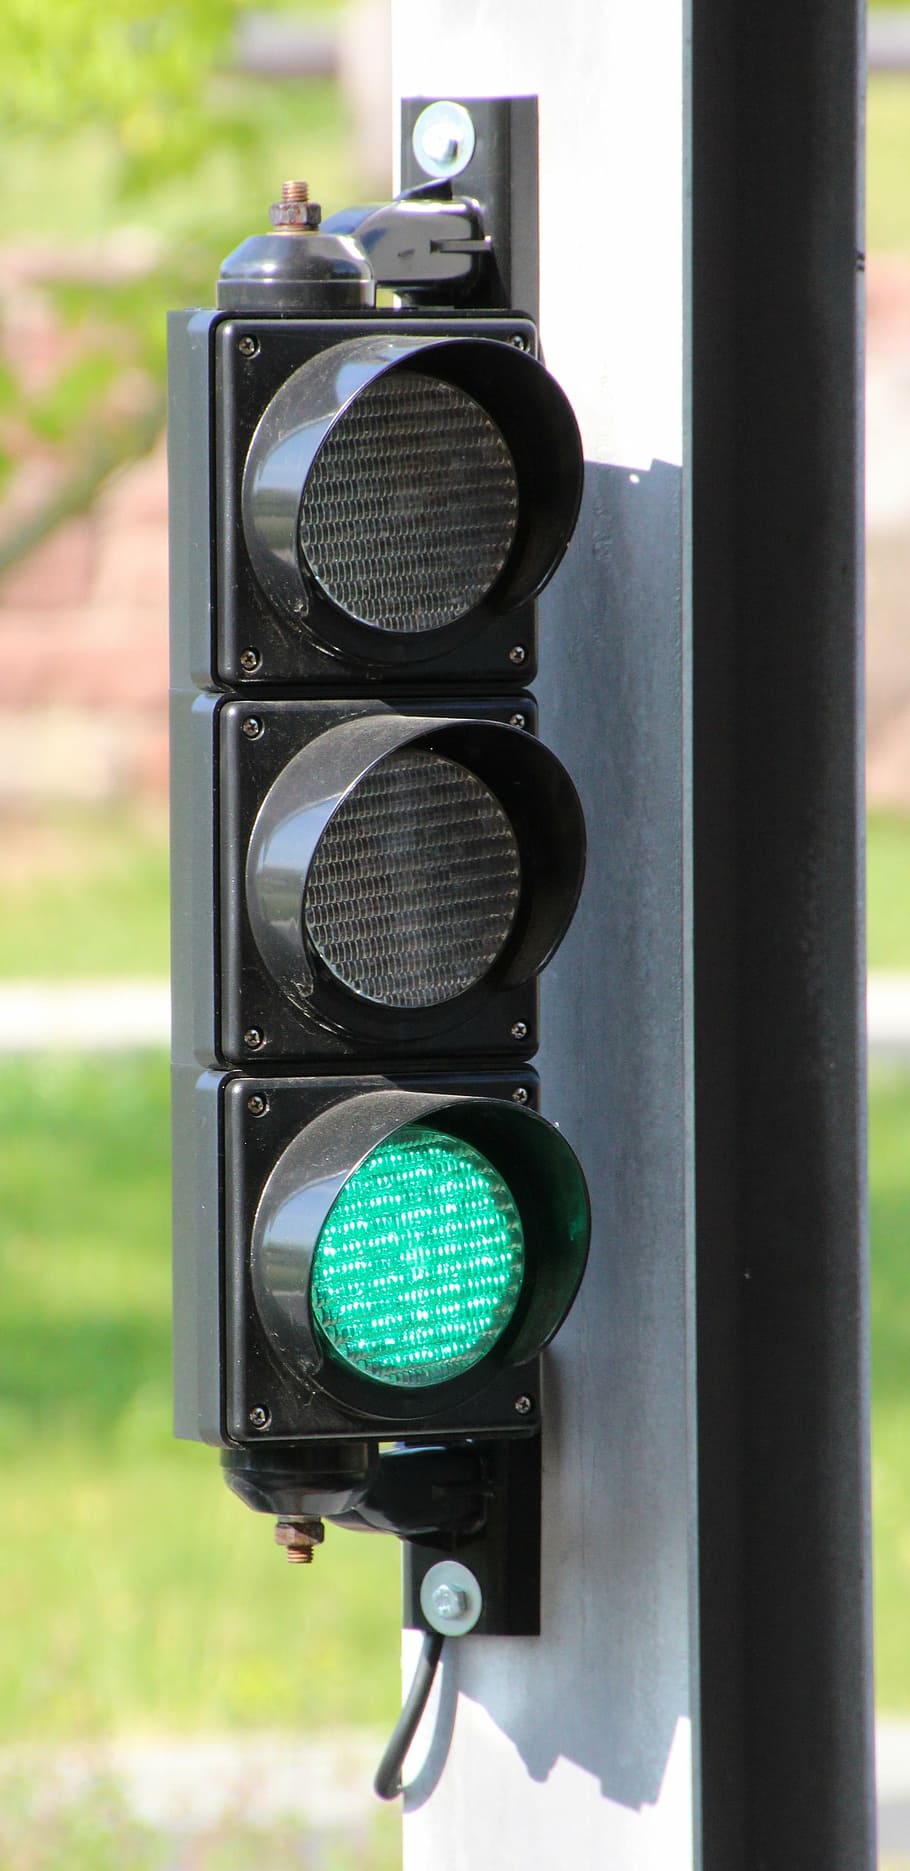 traffic lights, green, light signal, traffic signal, green light, stoplight, light, focus on foreground, green color, day